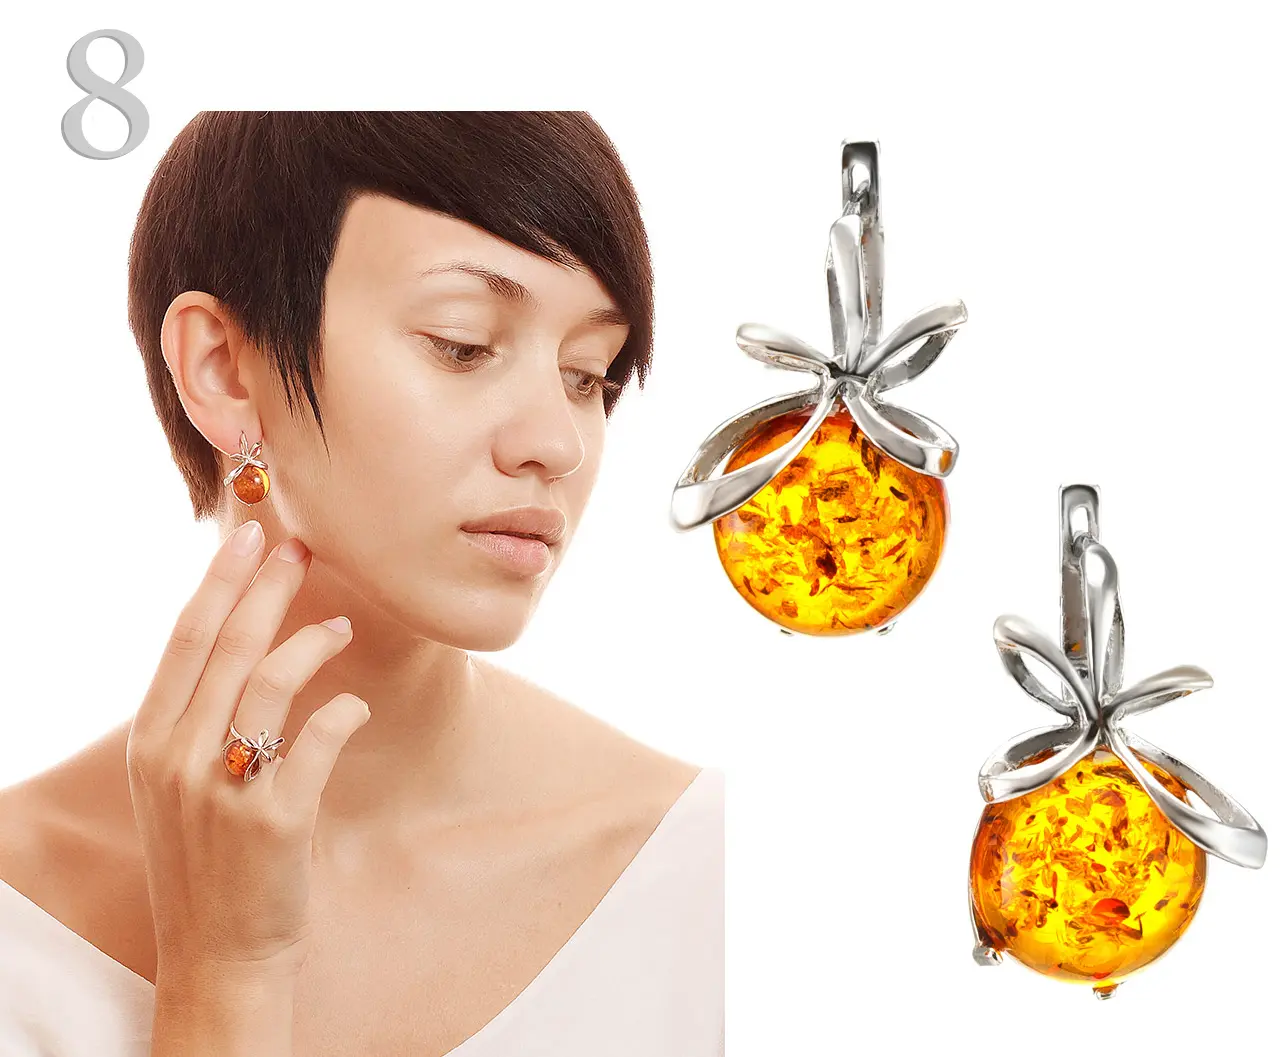 Amber earrings